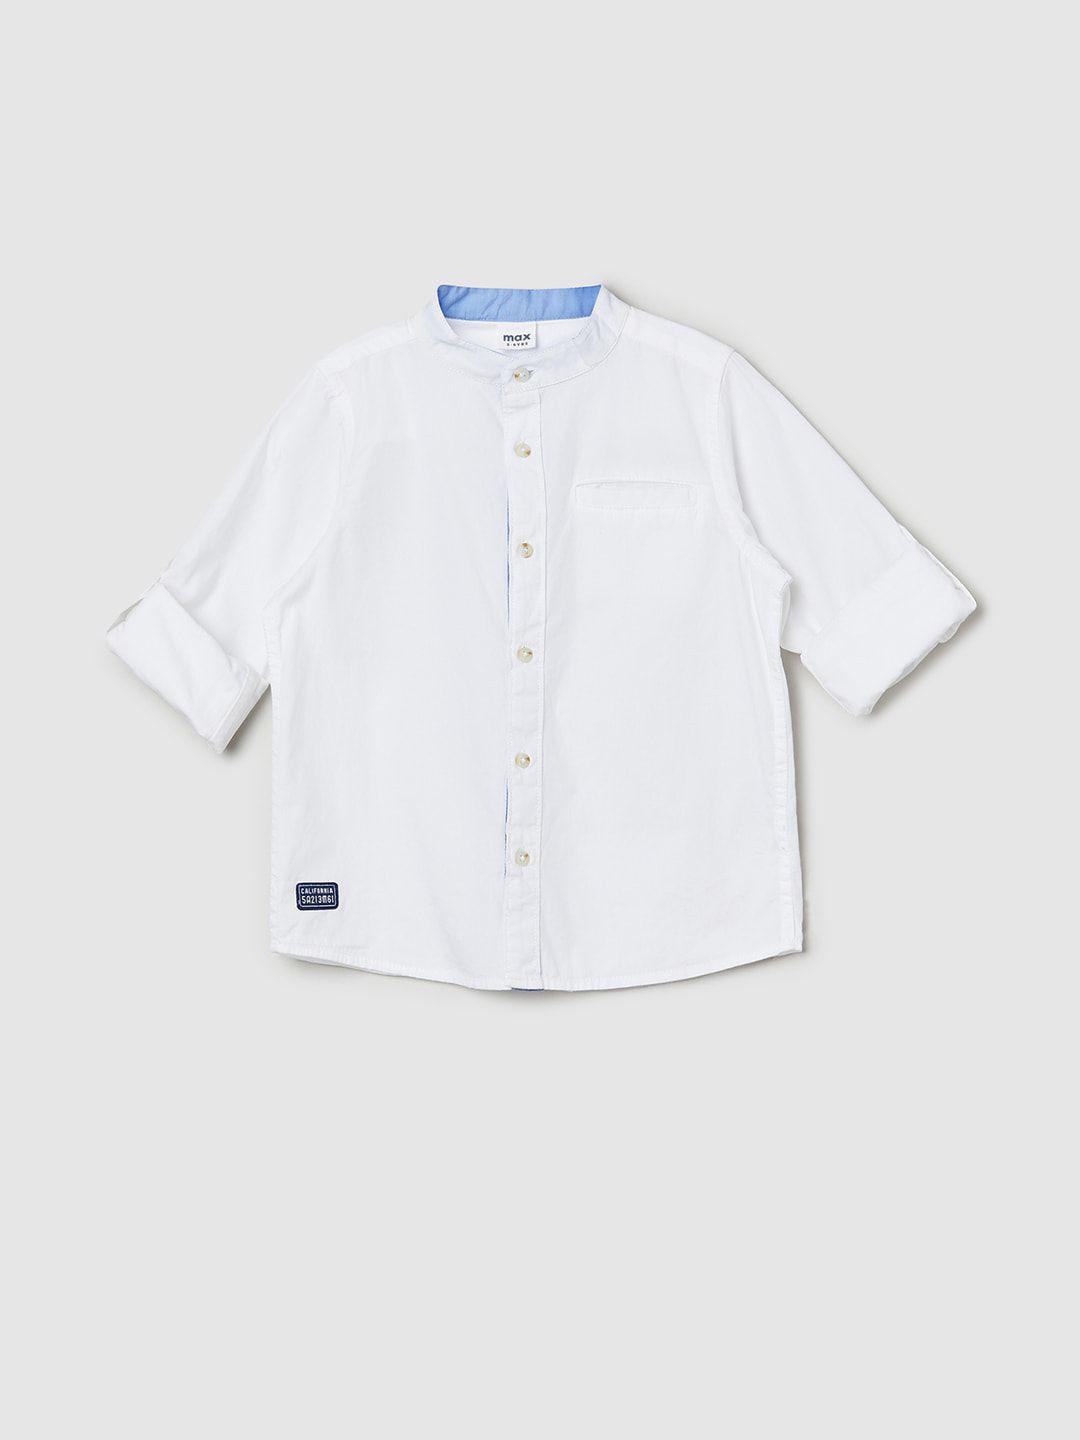 max-boys-pure-cotton-casual-shirt